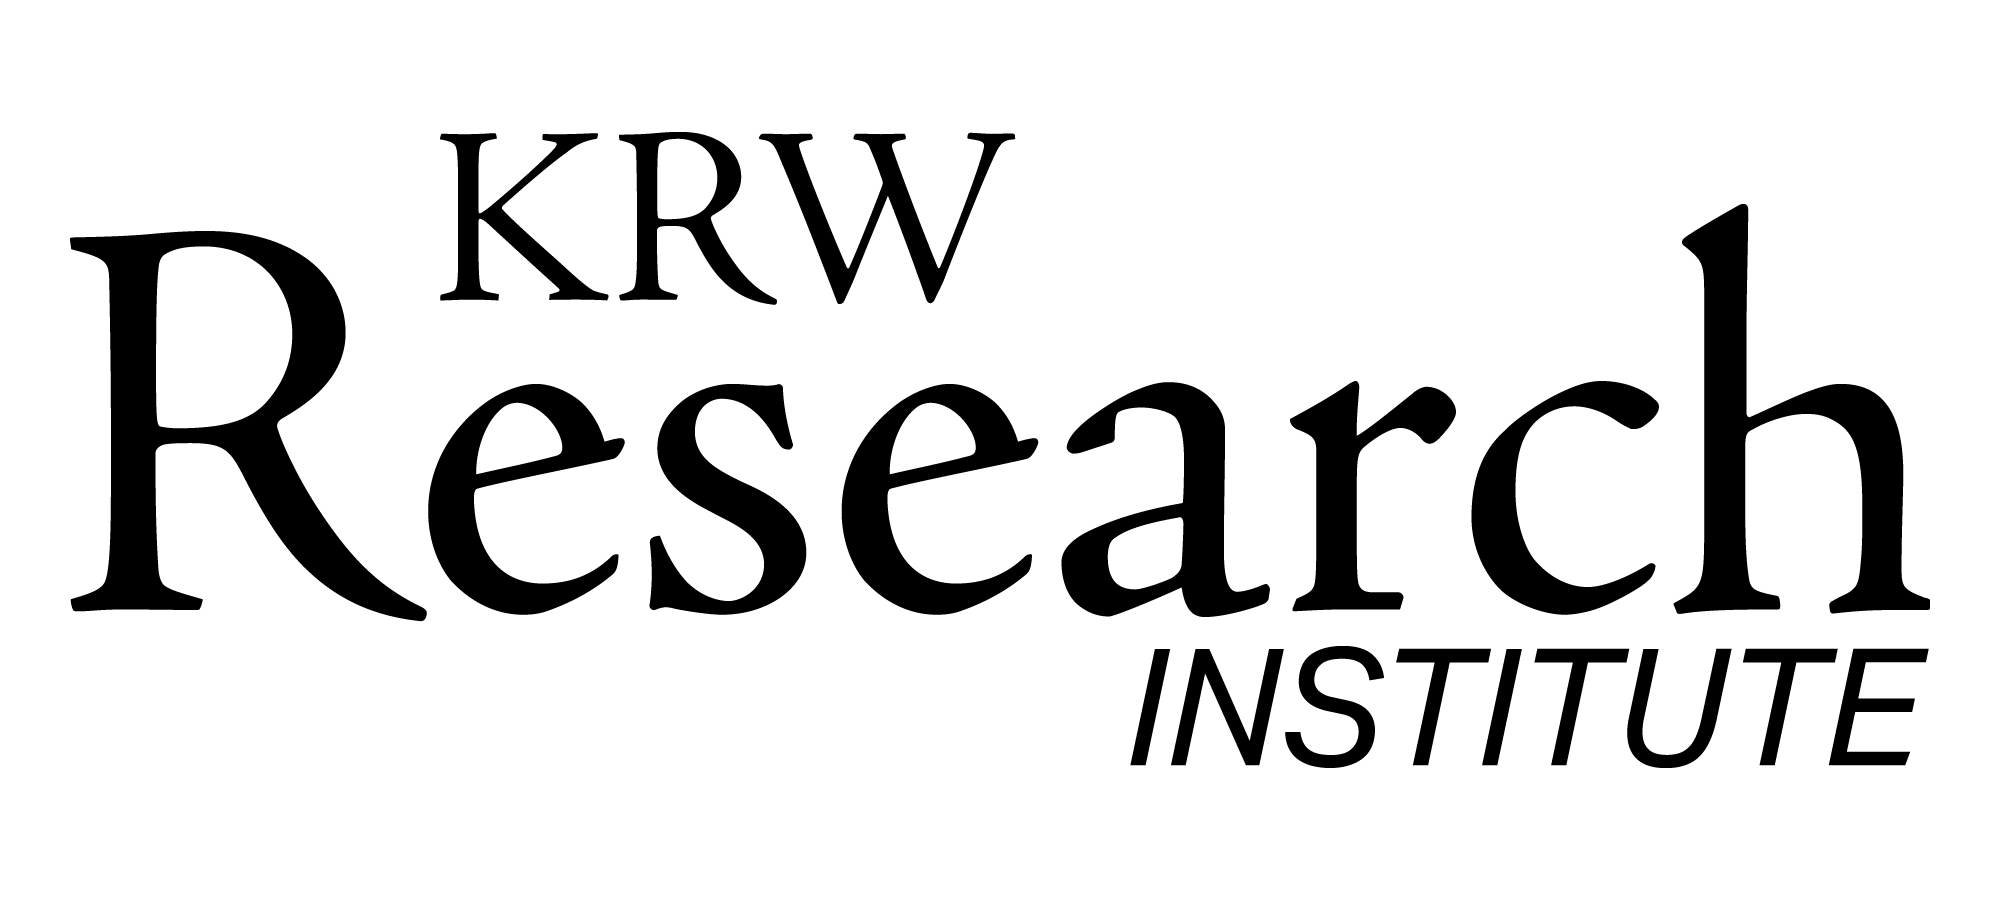 KRW Research Institute logo in black